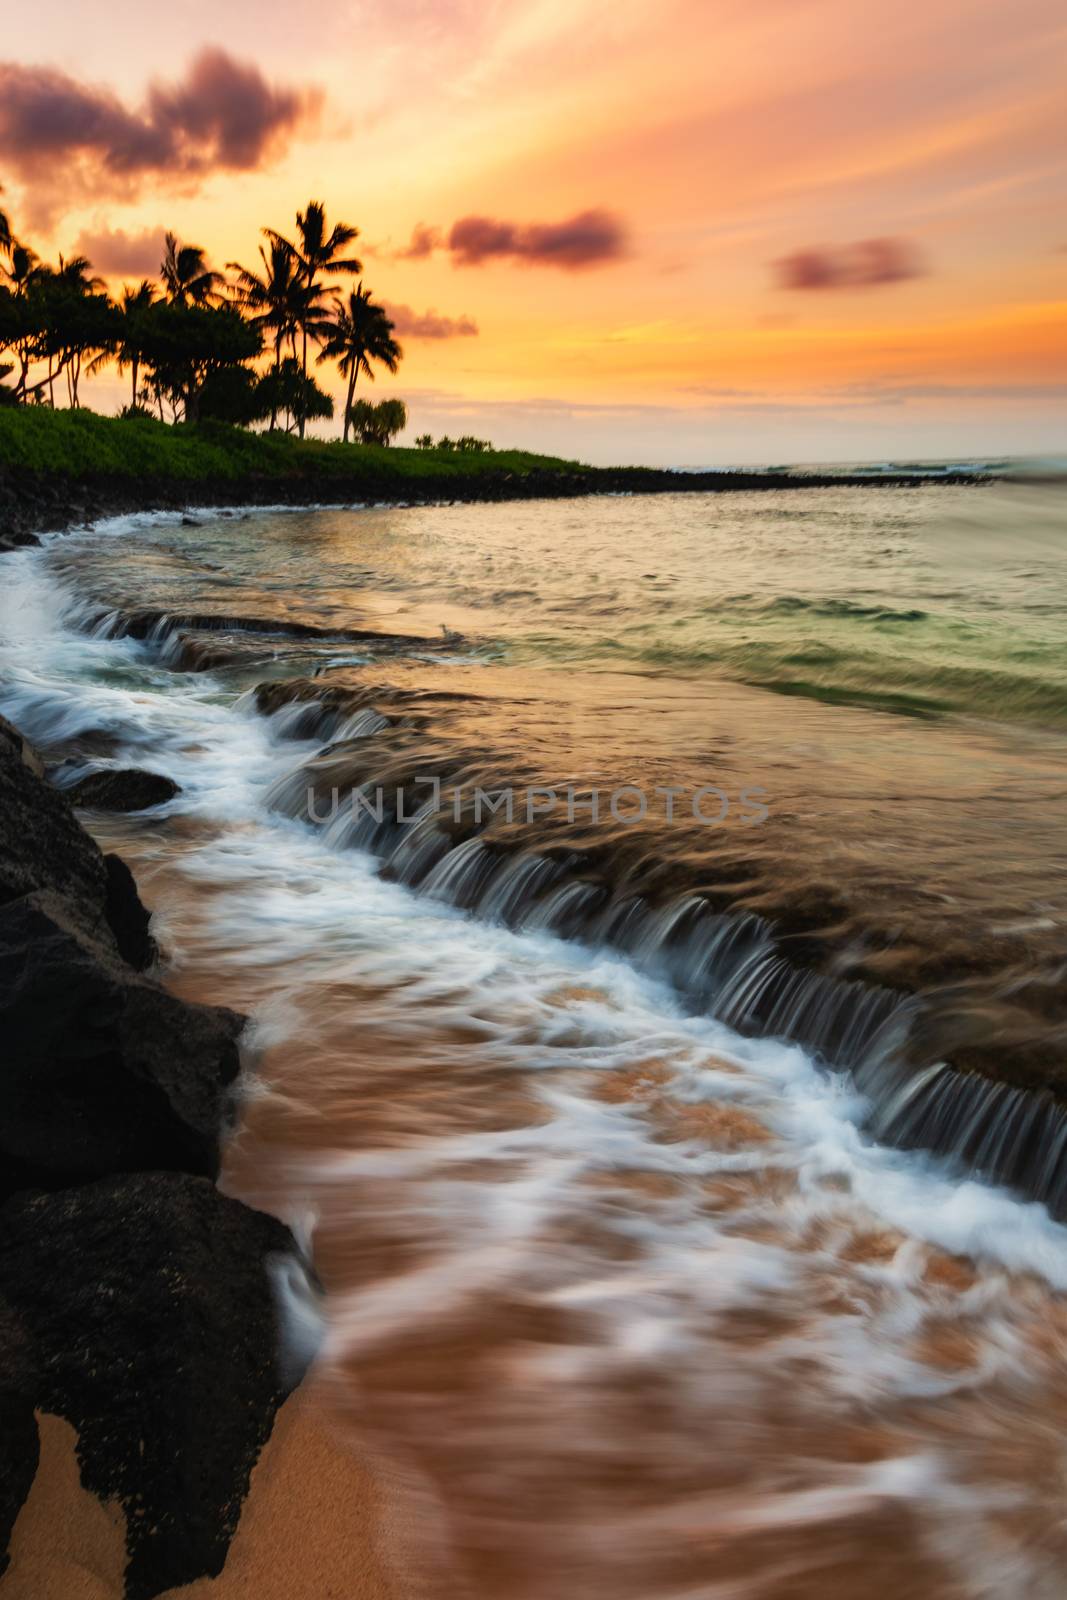 A beautiful sunrise at the beach on the south shore of Kauai, Hawaii.